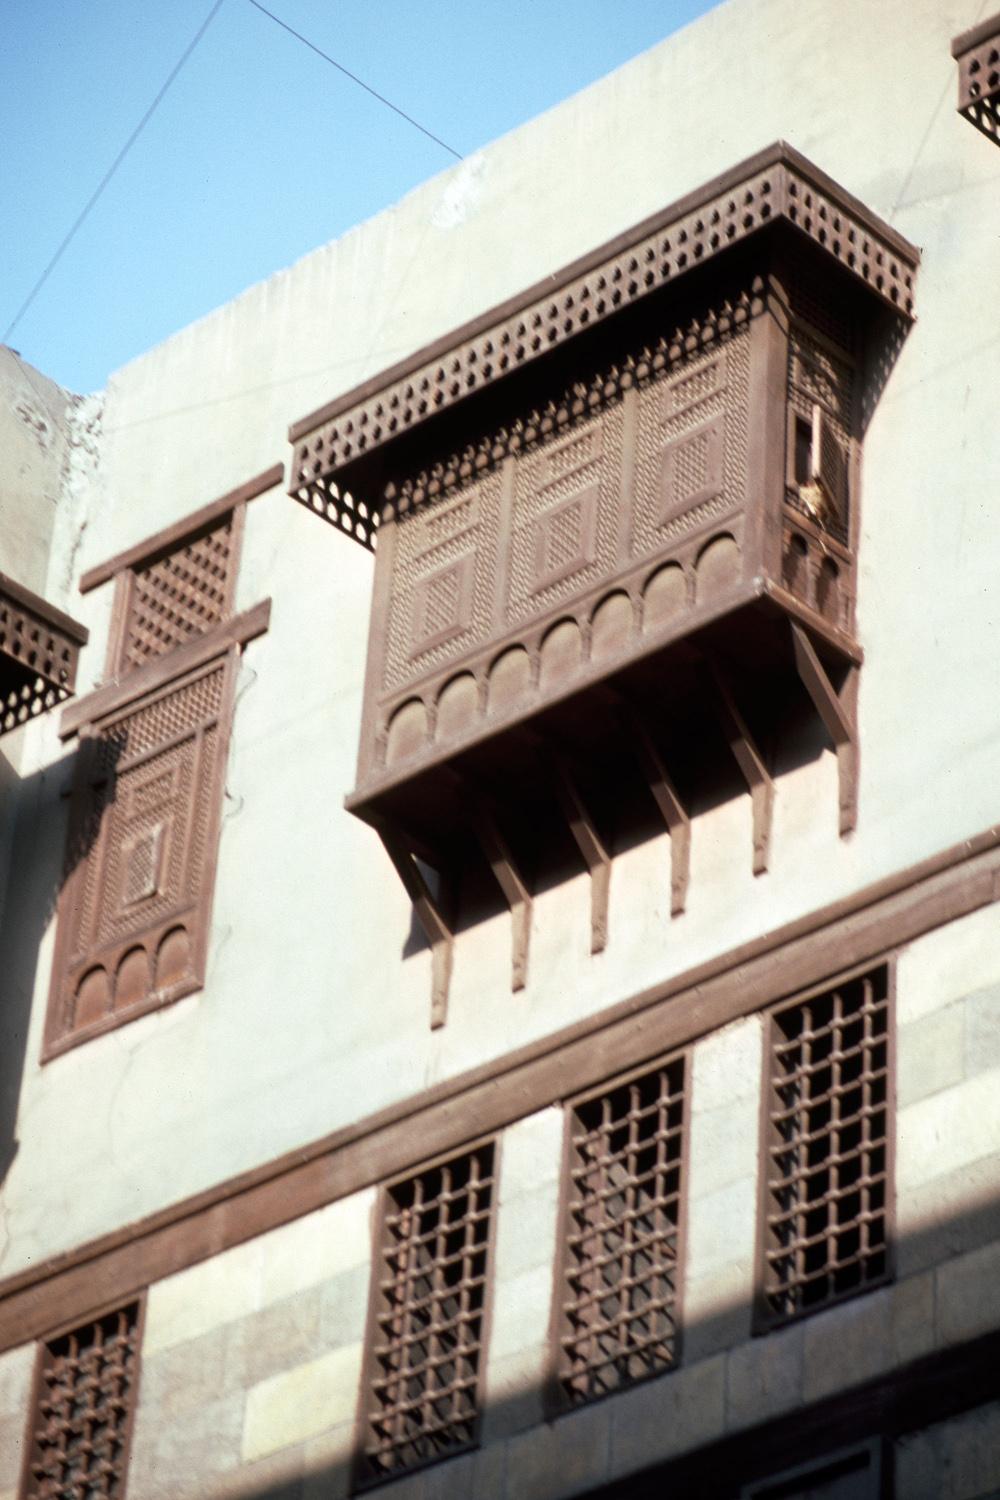 Courtyard detail, showing restored mashrabiyya